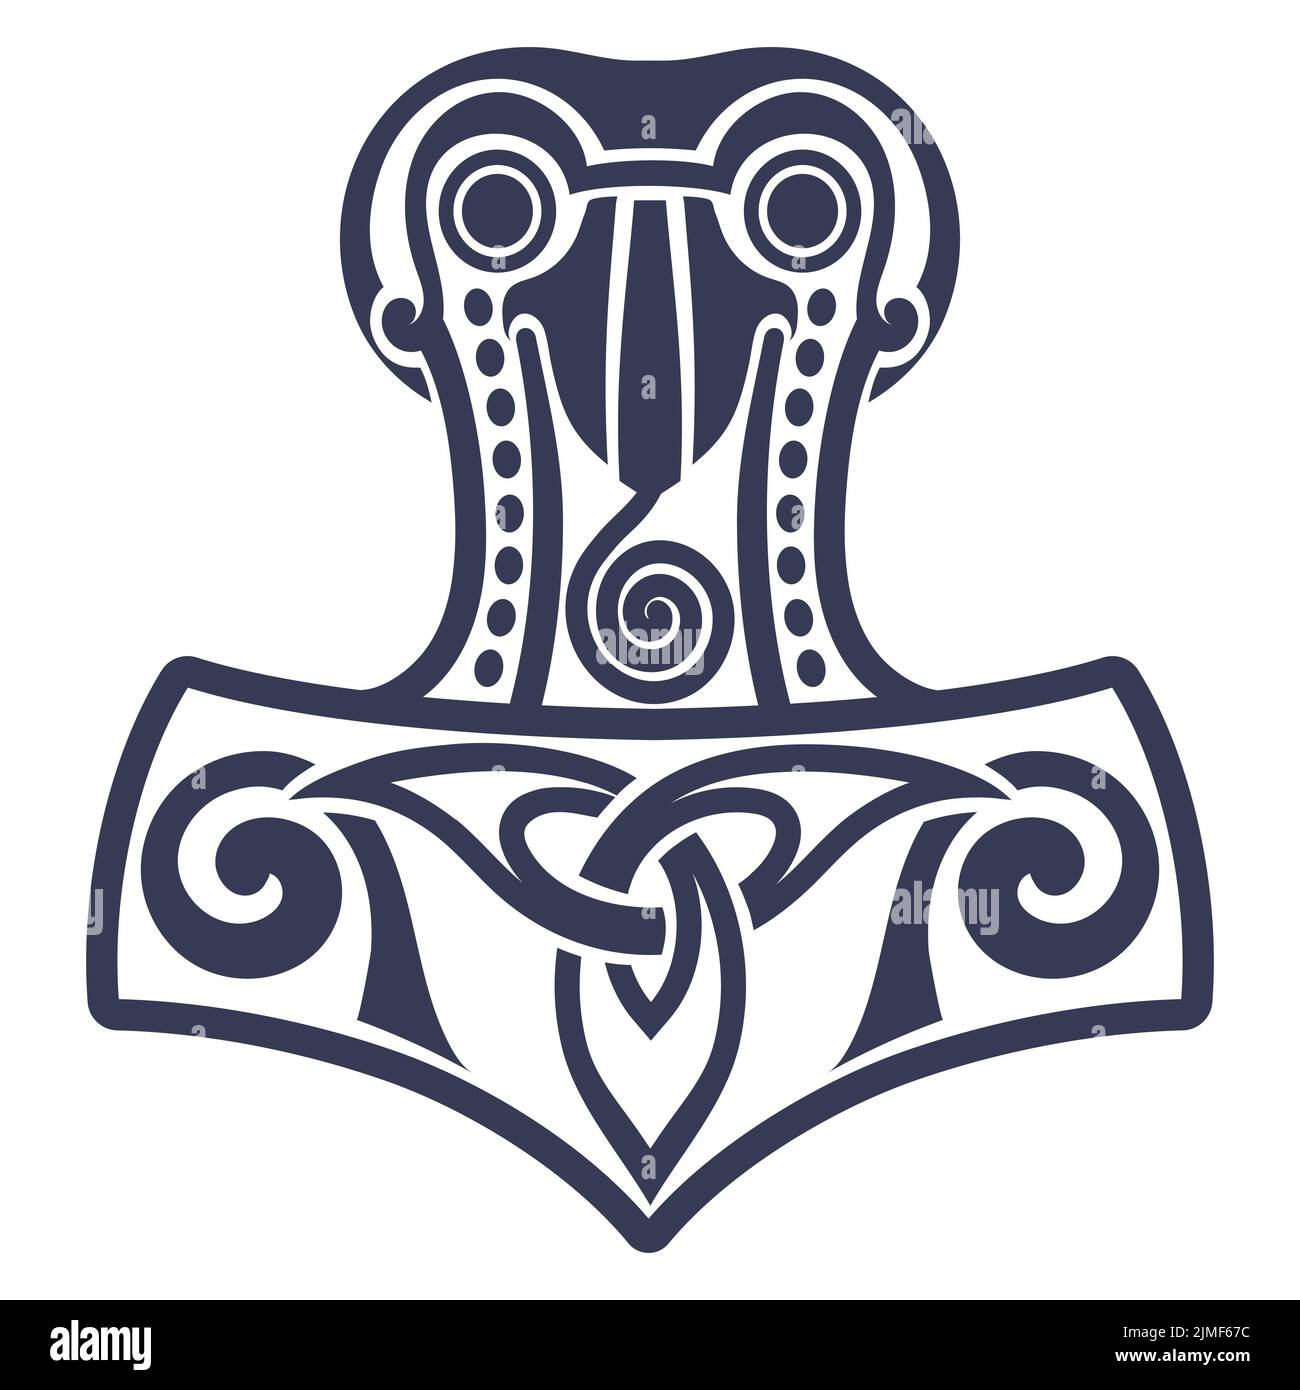 Viking style design. Thors hammer - Mjolnir and the Scandinavian ornament Stock Vector